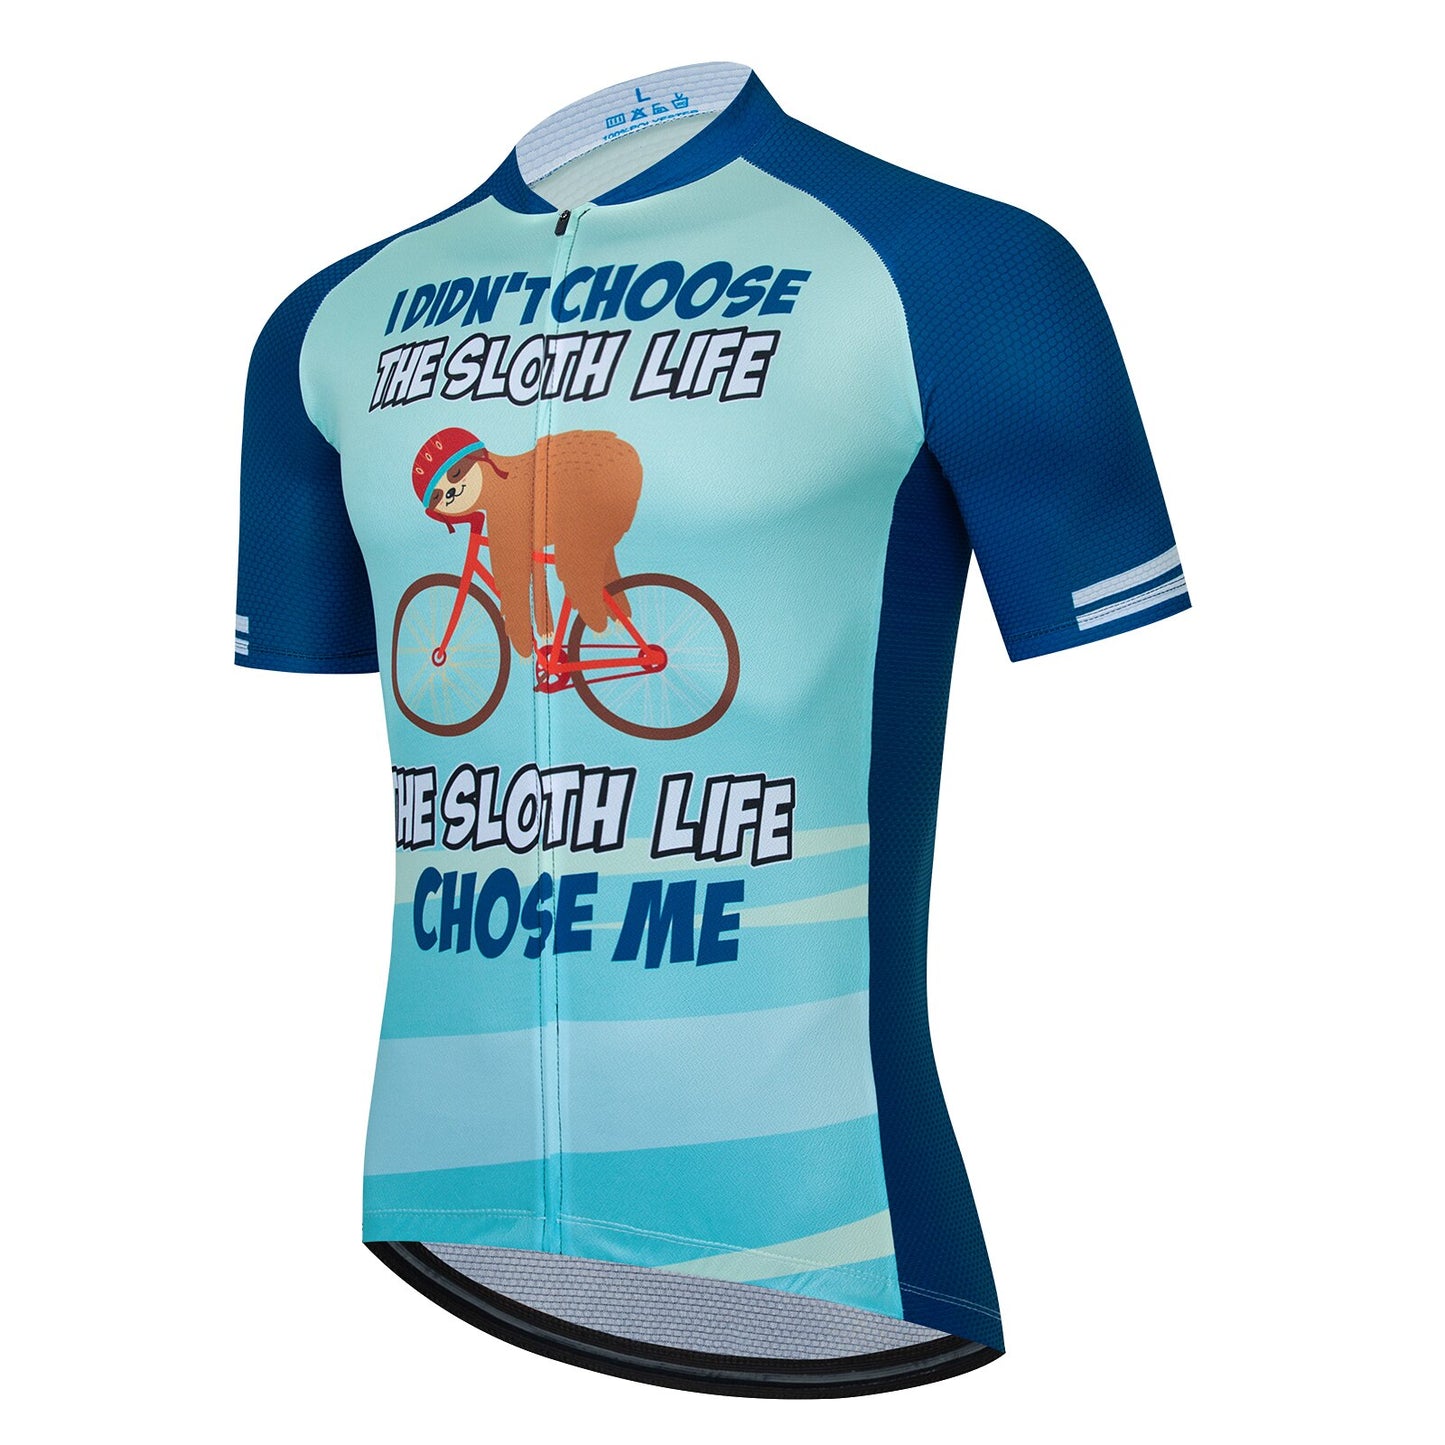 Sloth Life Chose Me Cycling Jersey